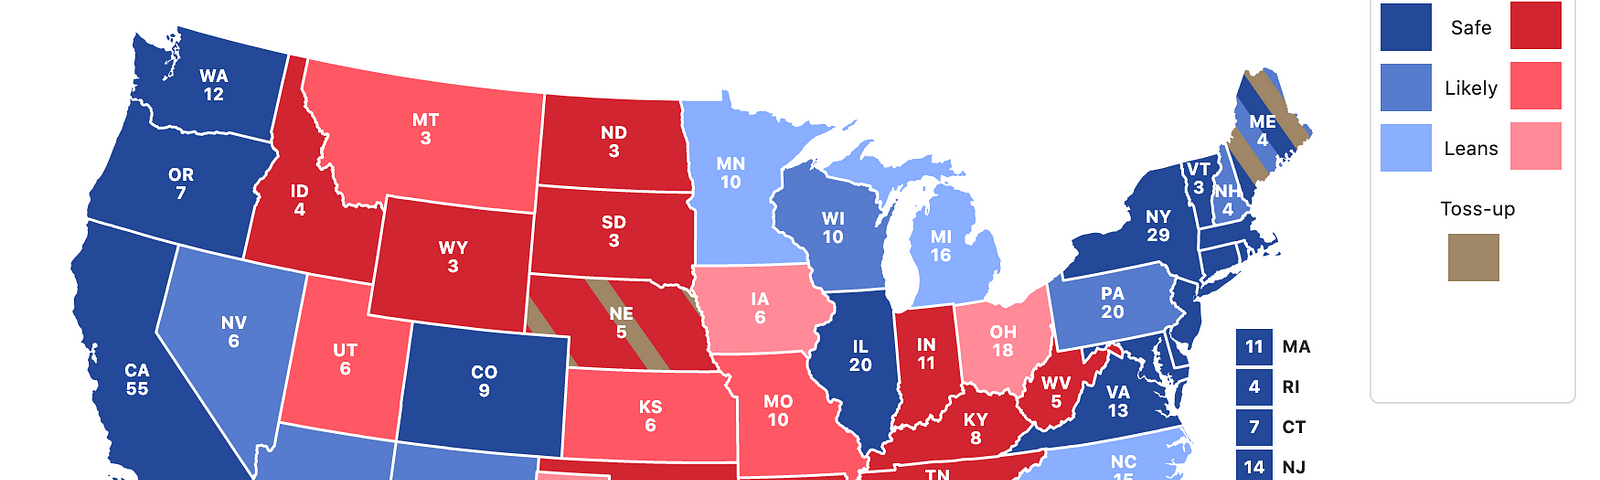 National state by state likelihood of Trump vs Biden winning Electoral College votes